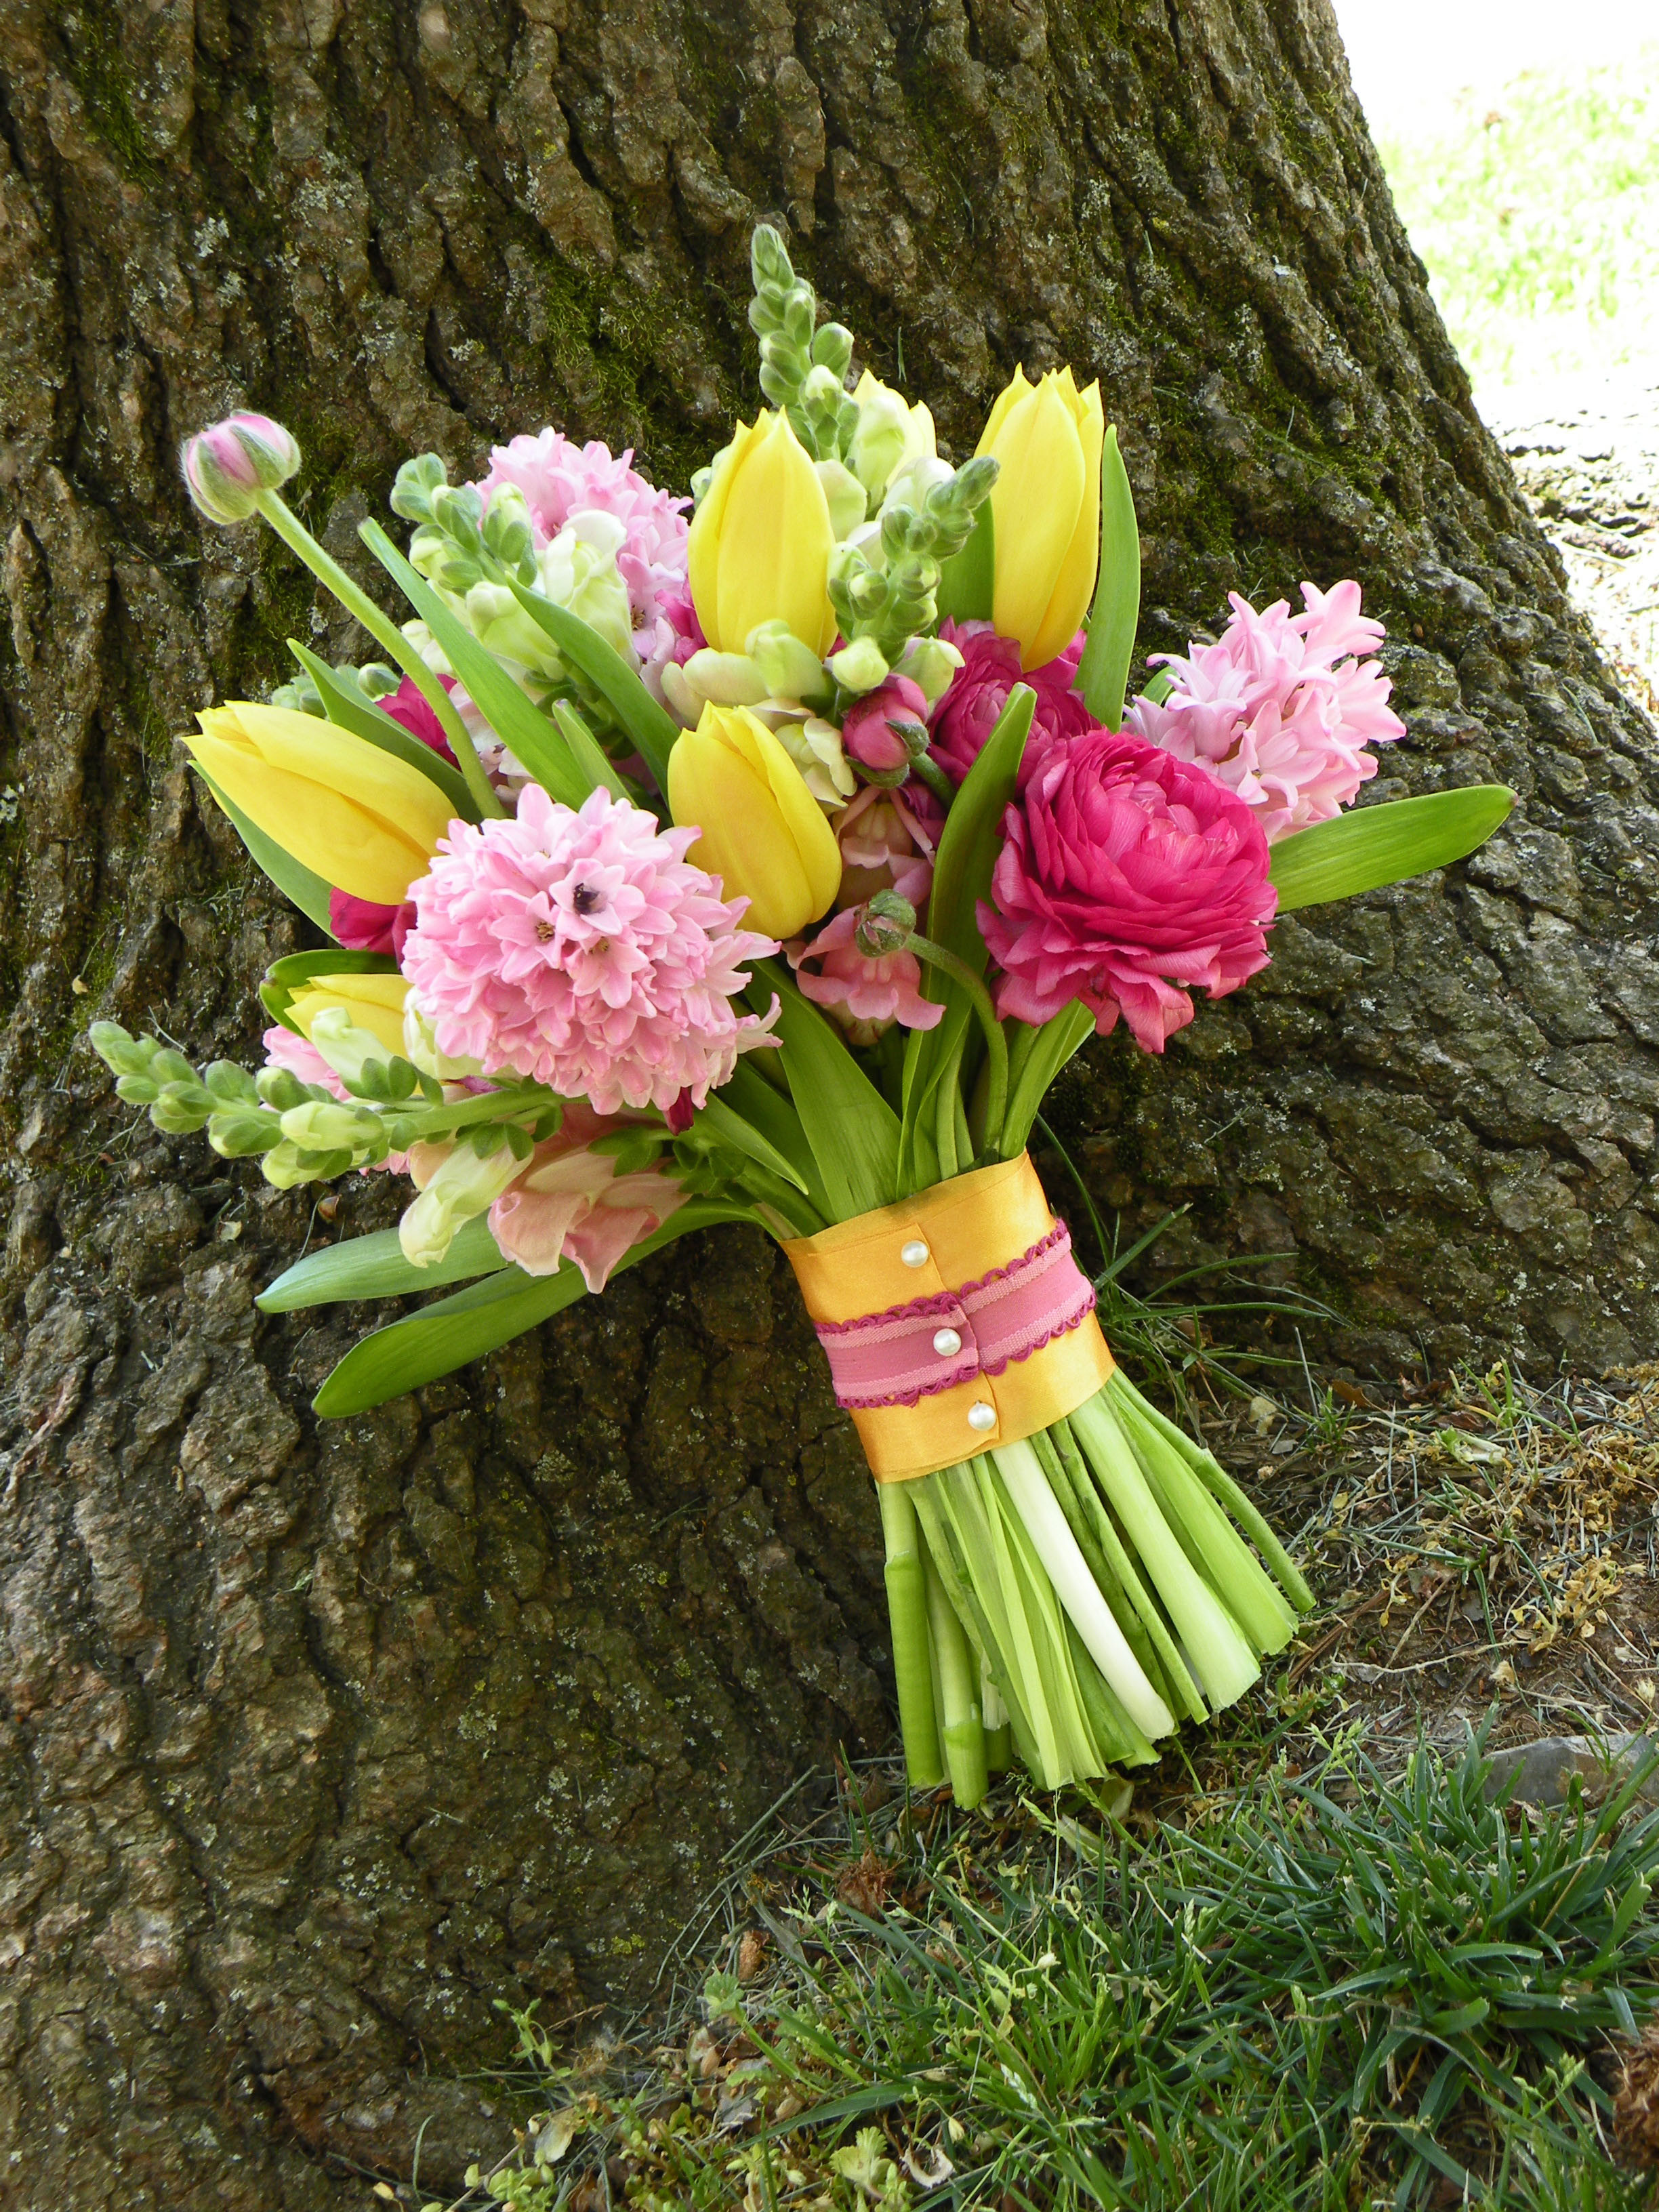 Best ideas about DIY Bridal Bouquet
. Save or Pin DIY – bridal bouquet Now.